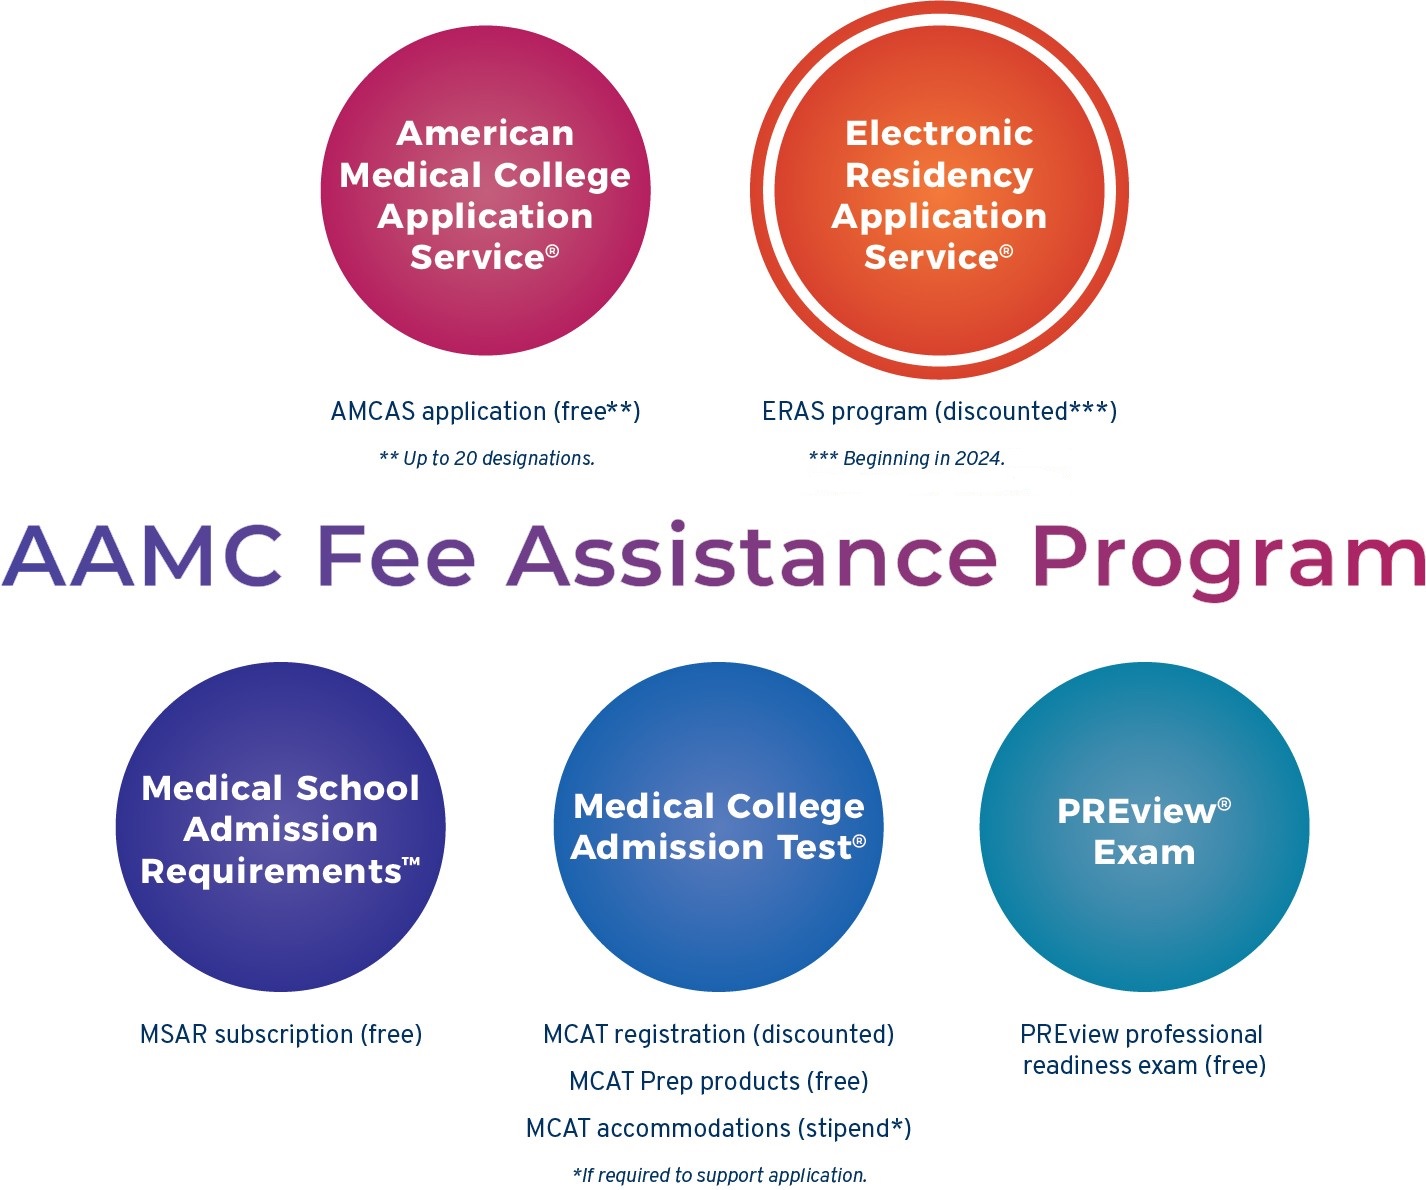 Image of AAMC Fee Assistance Program benefits